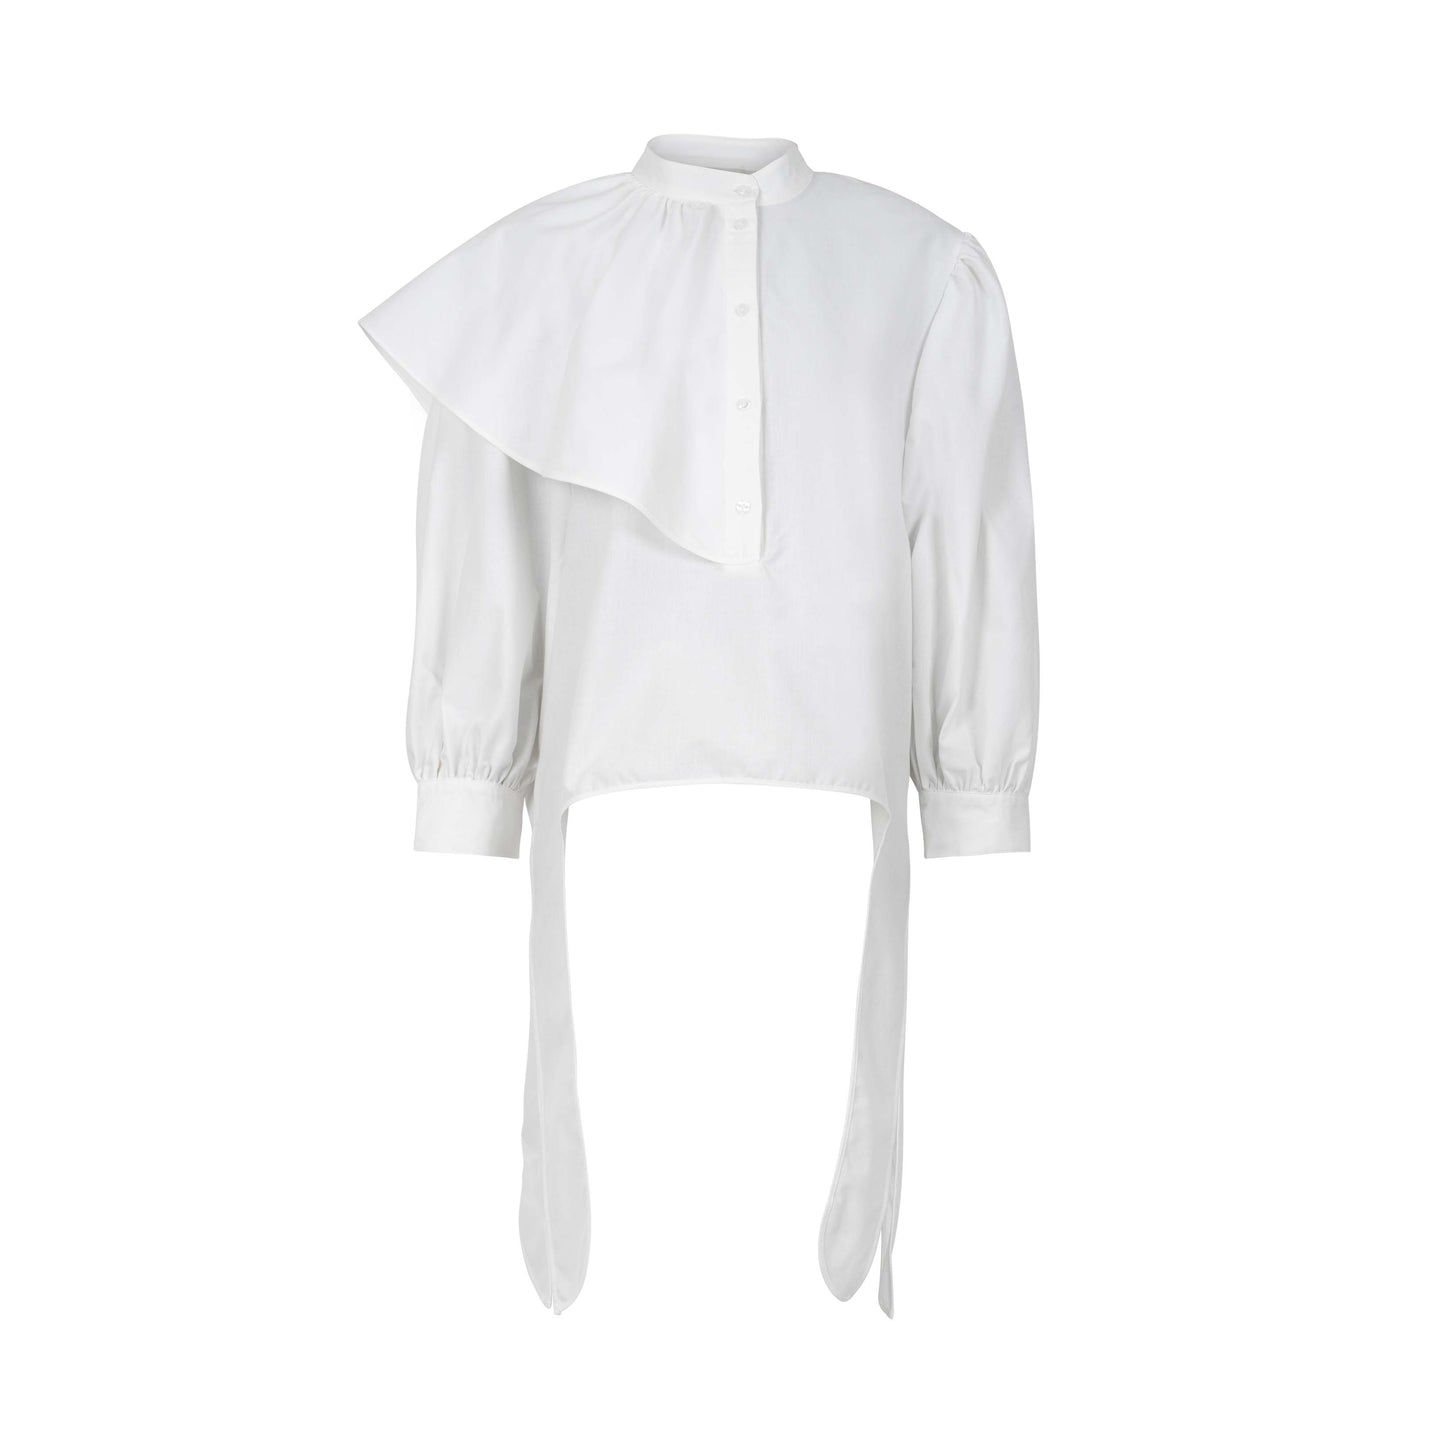 Mandana shirt // Bright White